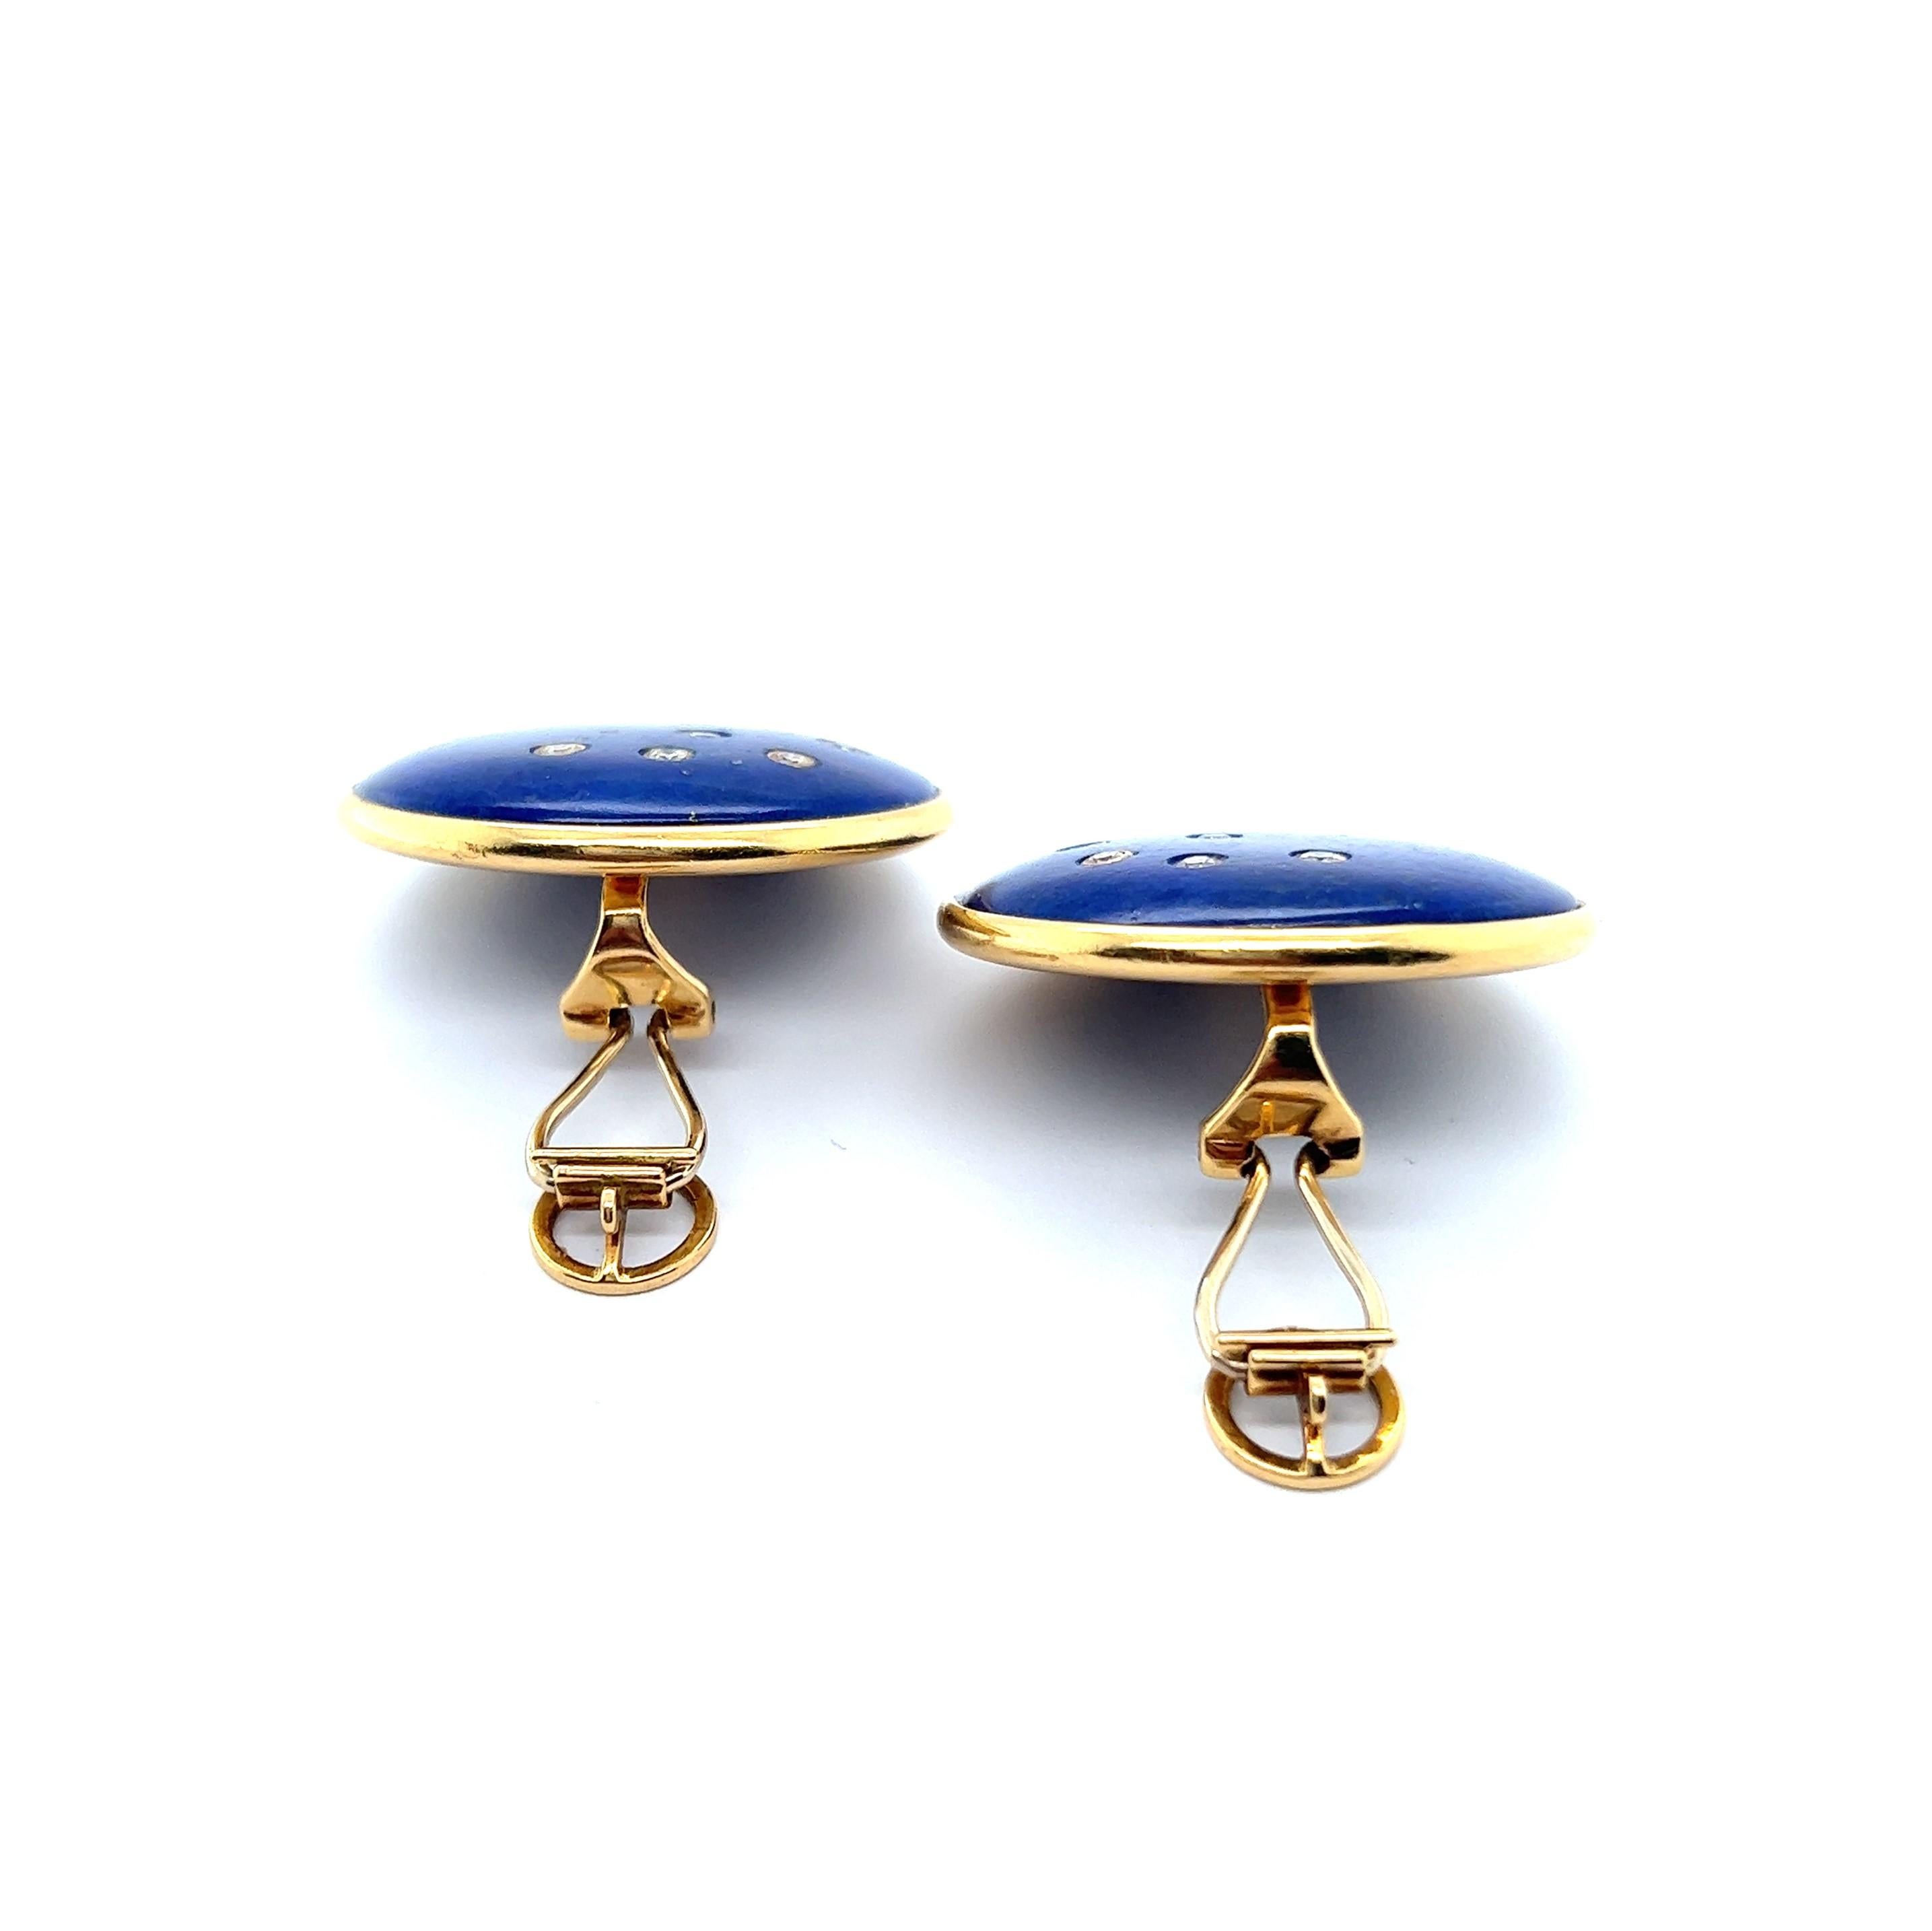 Brilliant Cut Lapis Lazuli Earrings with Diamonds in 18 Karat Yellow Gold